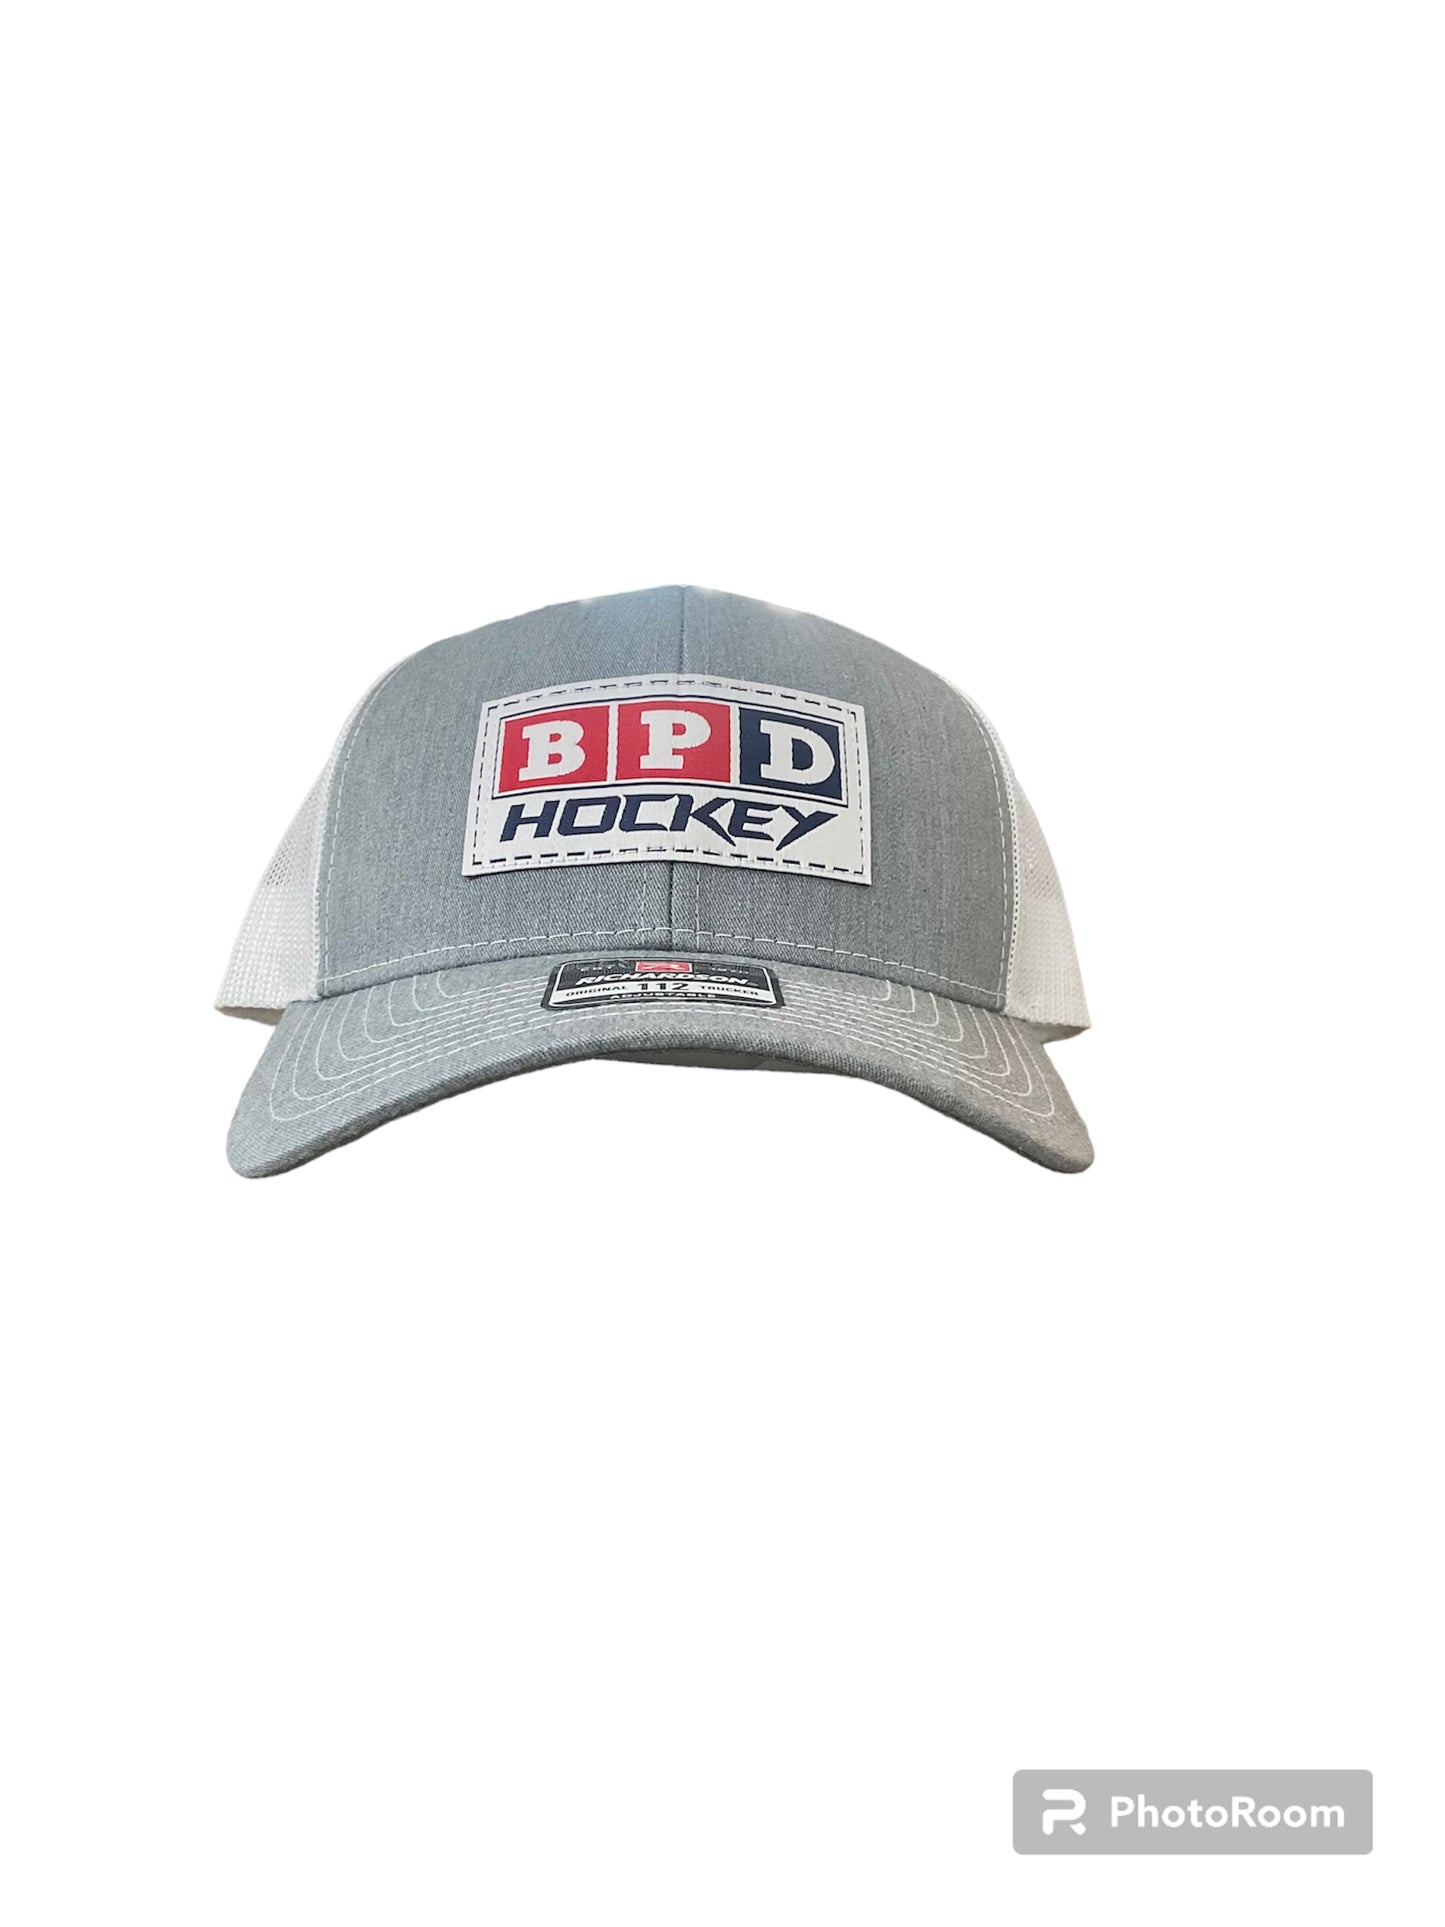 Grey and White BPD Hockey Hat